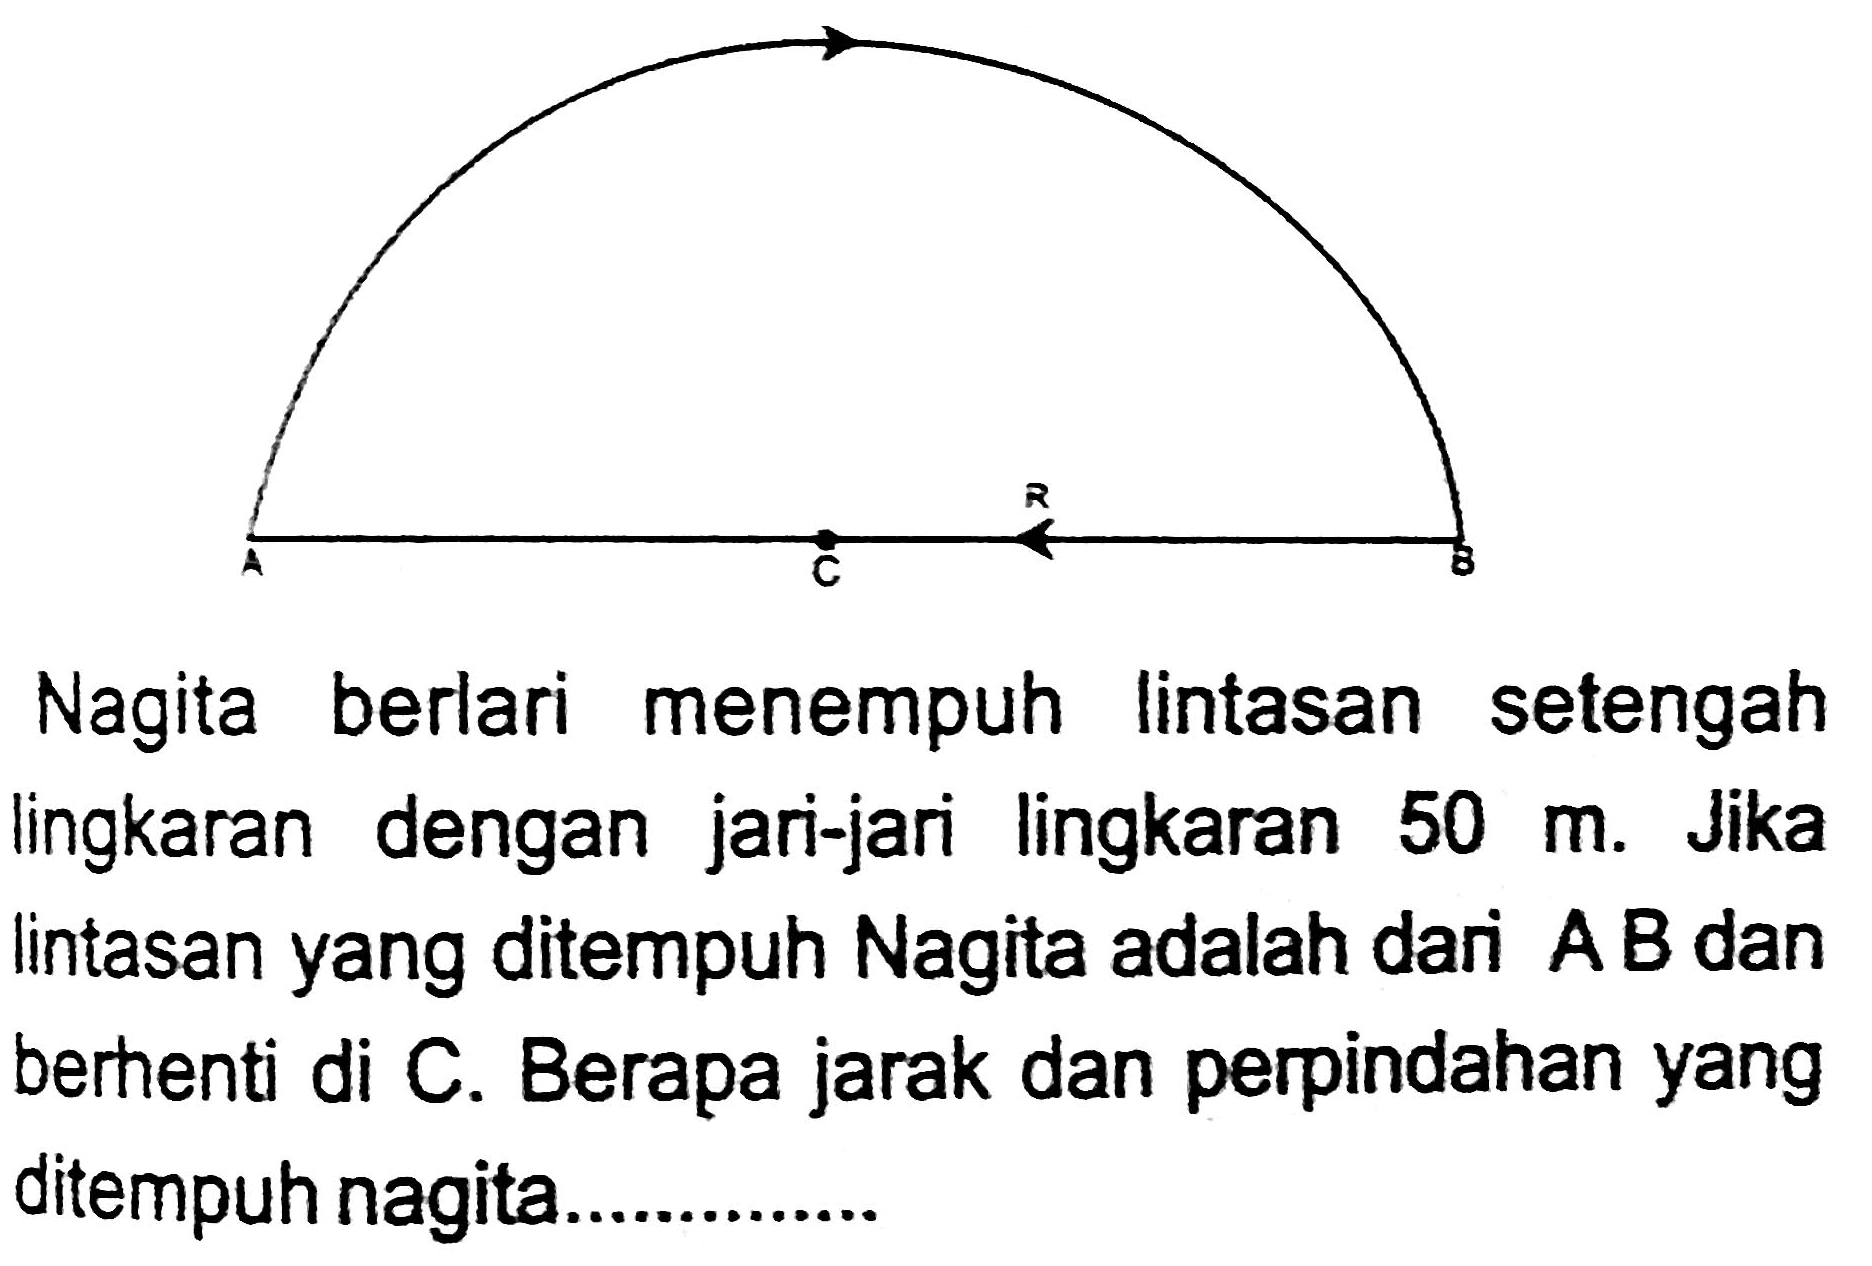 Nagita berlari menempuh lintasan setengah lingkaran dengan jari-jari lingkaran  50 m . Jika lintasan yang ditempuh Nagita adalah dari  A B  dan berhenti di C. Berapa jarak dan perpindahan yang ditempuh nagita.